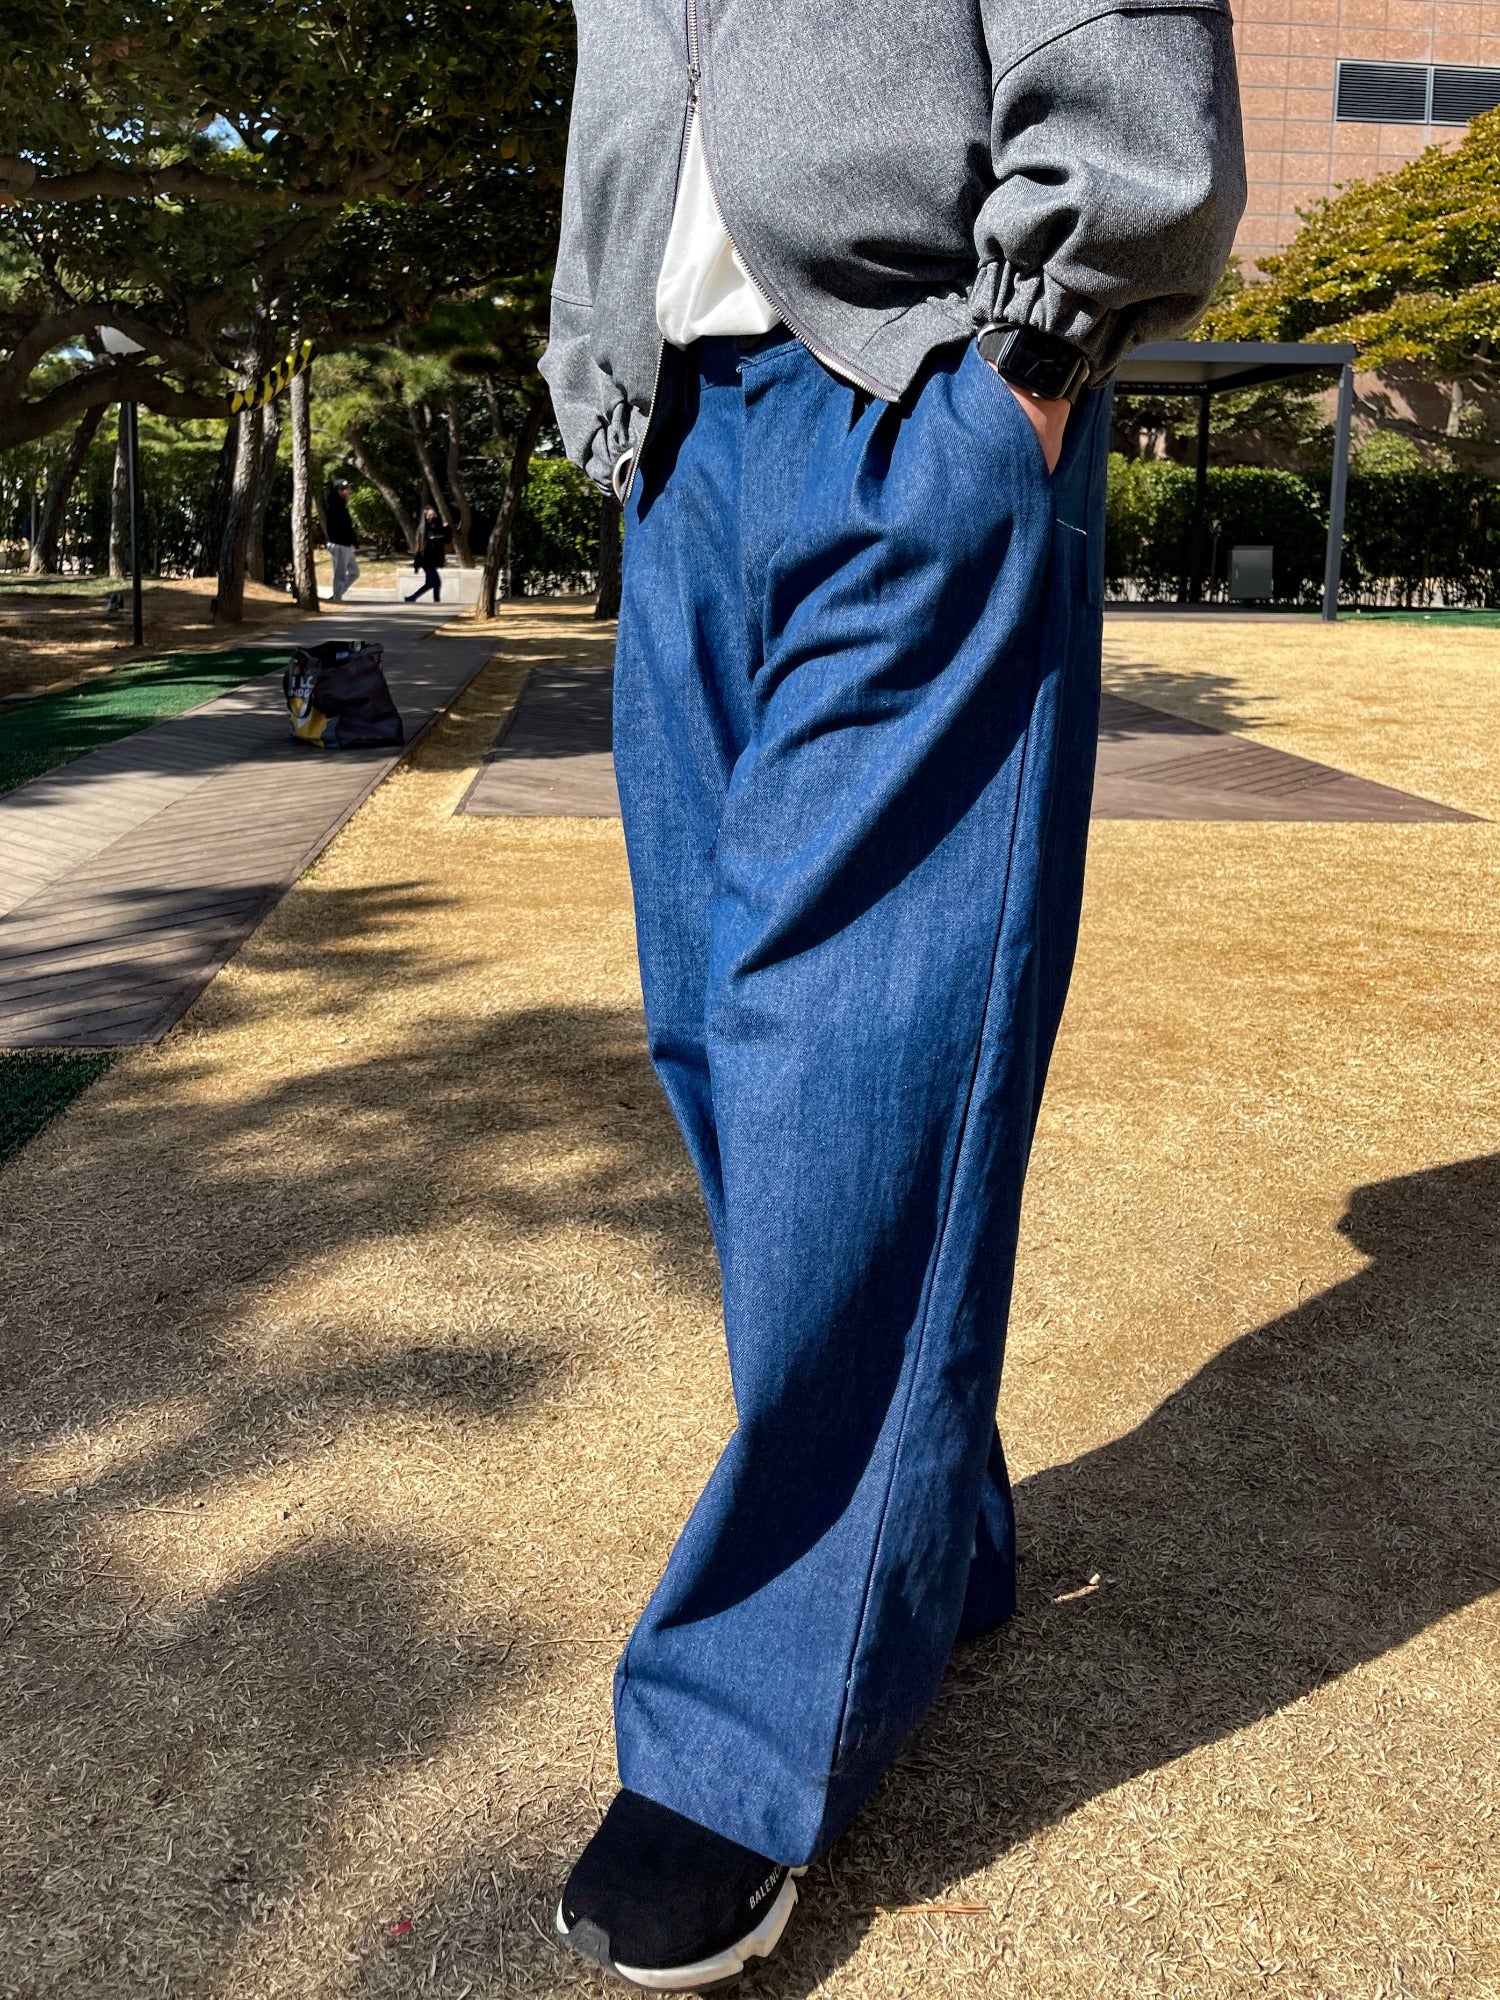 Two Tuck Balloon Denim Pants Blue 남녀공용 와이드핏 투턱 밴딩 데님팬츠 미니멀룩 중청